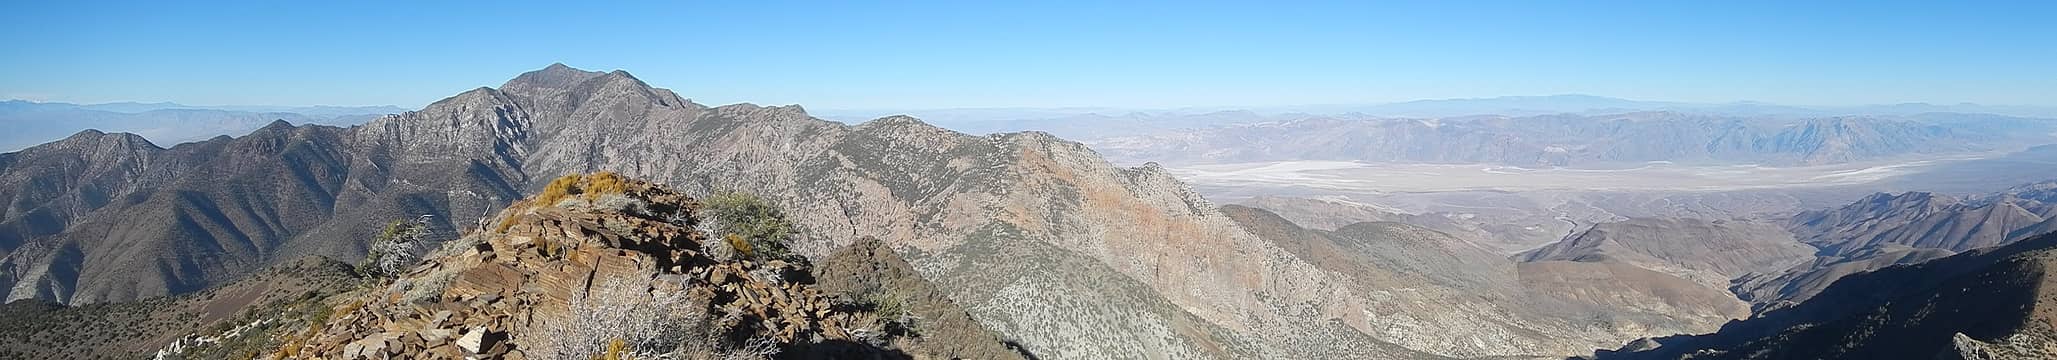 Sentinel summit panorama